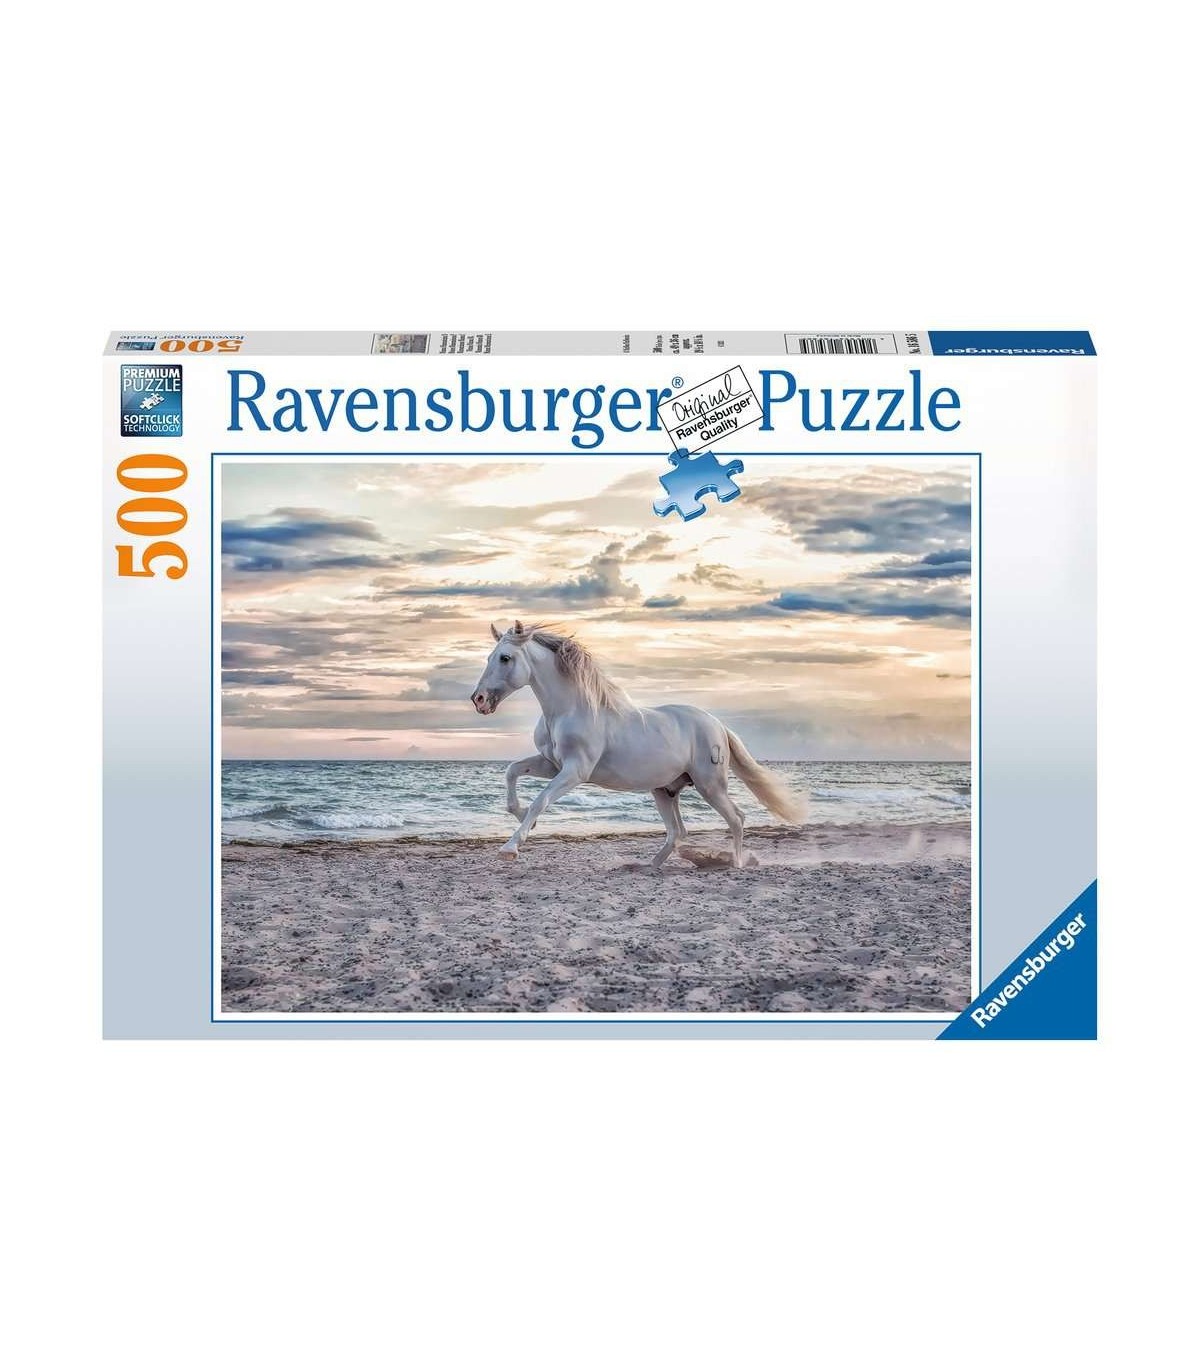 Puzzle Ravensburger 49x36 cm. 500 pz. Cavallo in Spiaggia